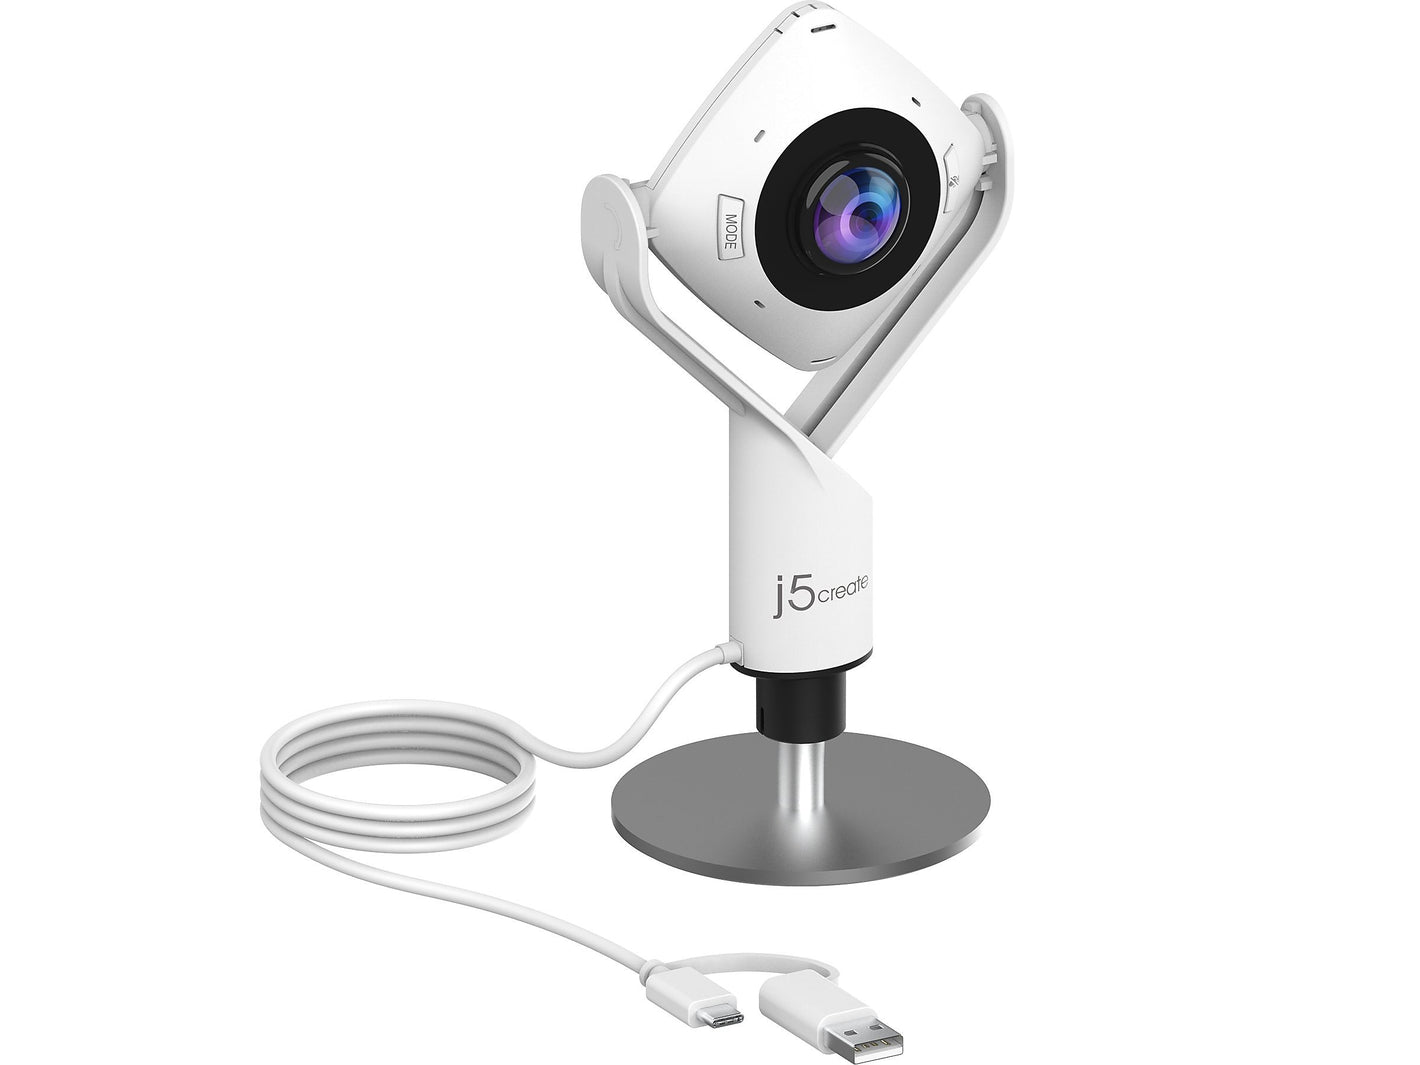 j5create Full HD 1920 x 1080 Conferencing Webcam, 2.1 Megapixels, White/Black